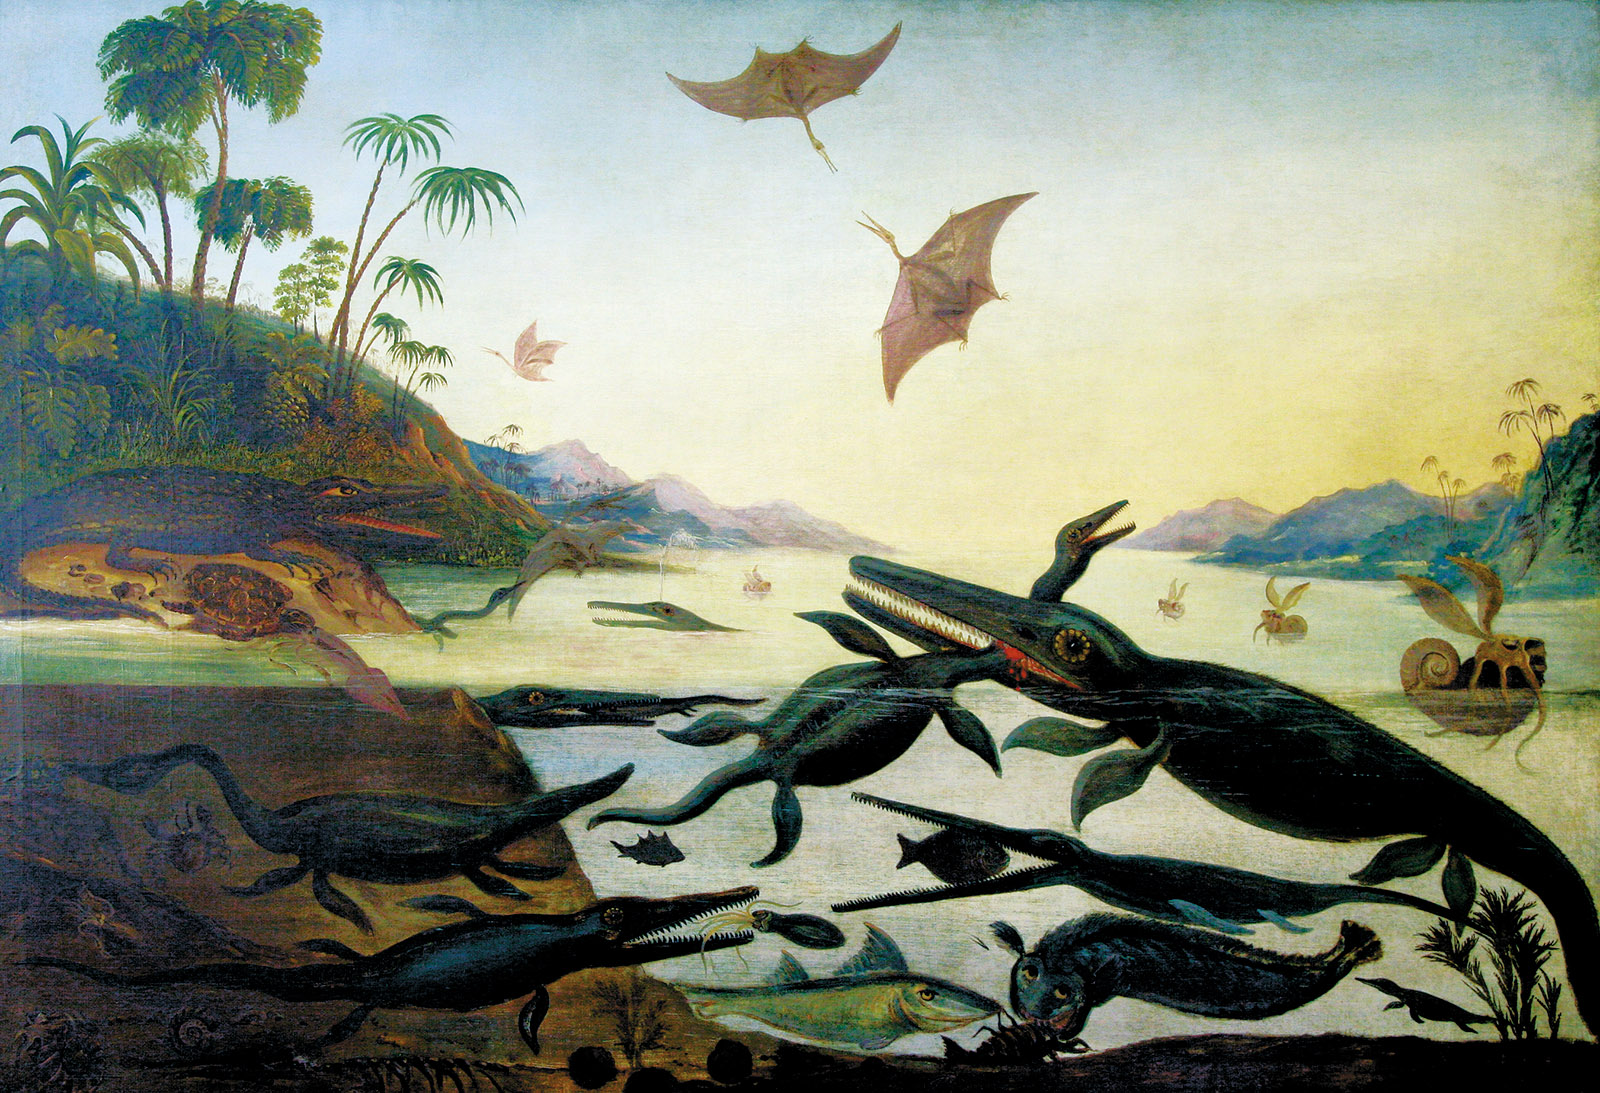 Life in the Jurassic Sea ‘Duria Antiquior’ by Robert Farren